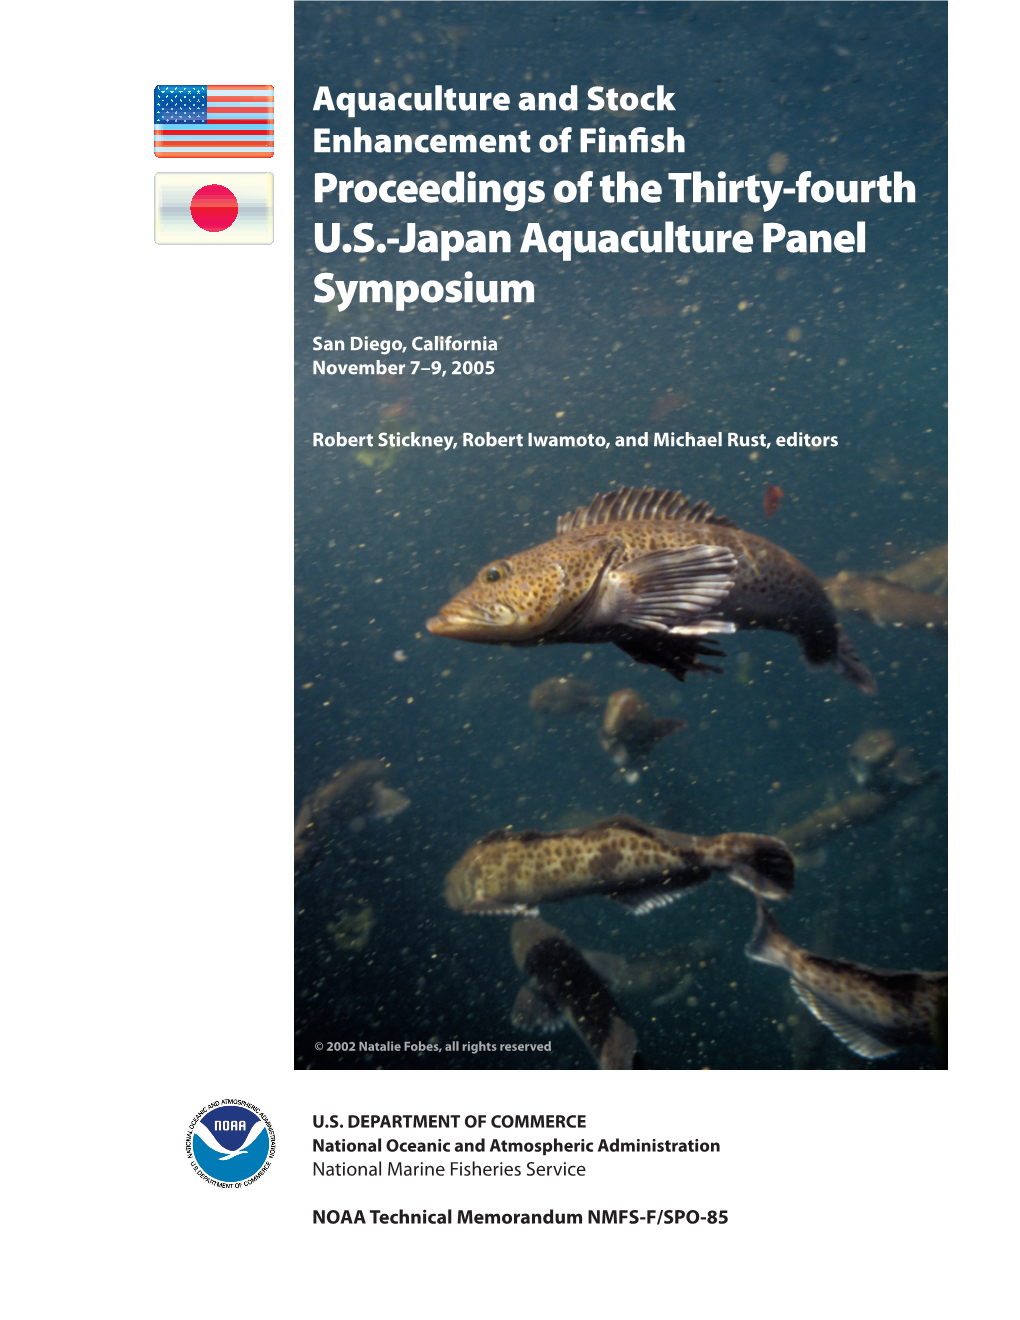 Proceedings of the Thirty-Fourth U.S.-Japan Aquaculture Panel Symposium